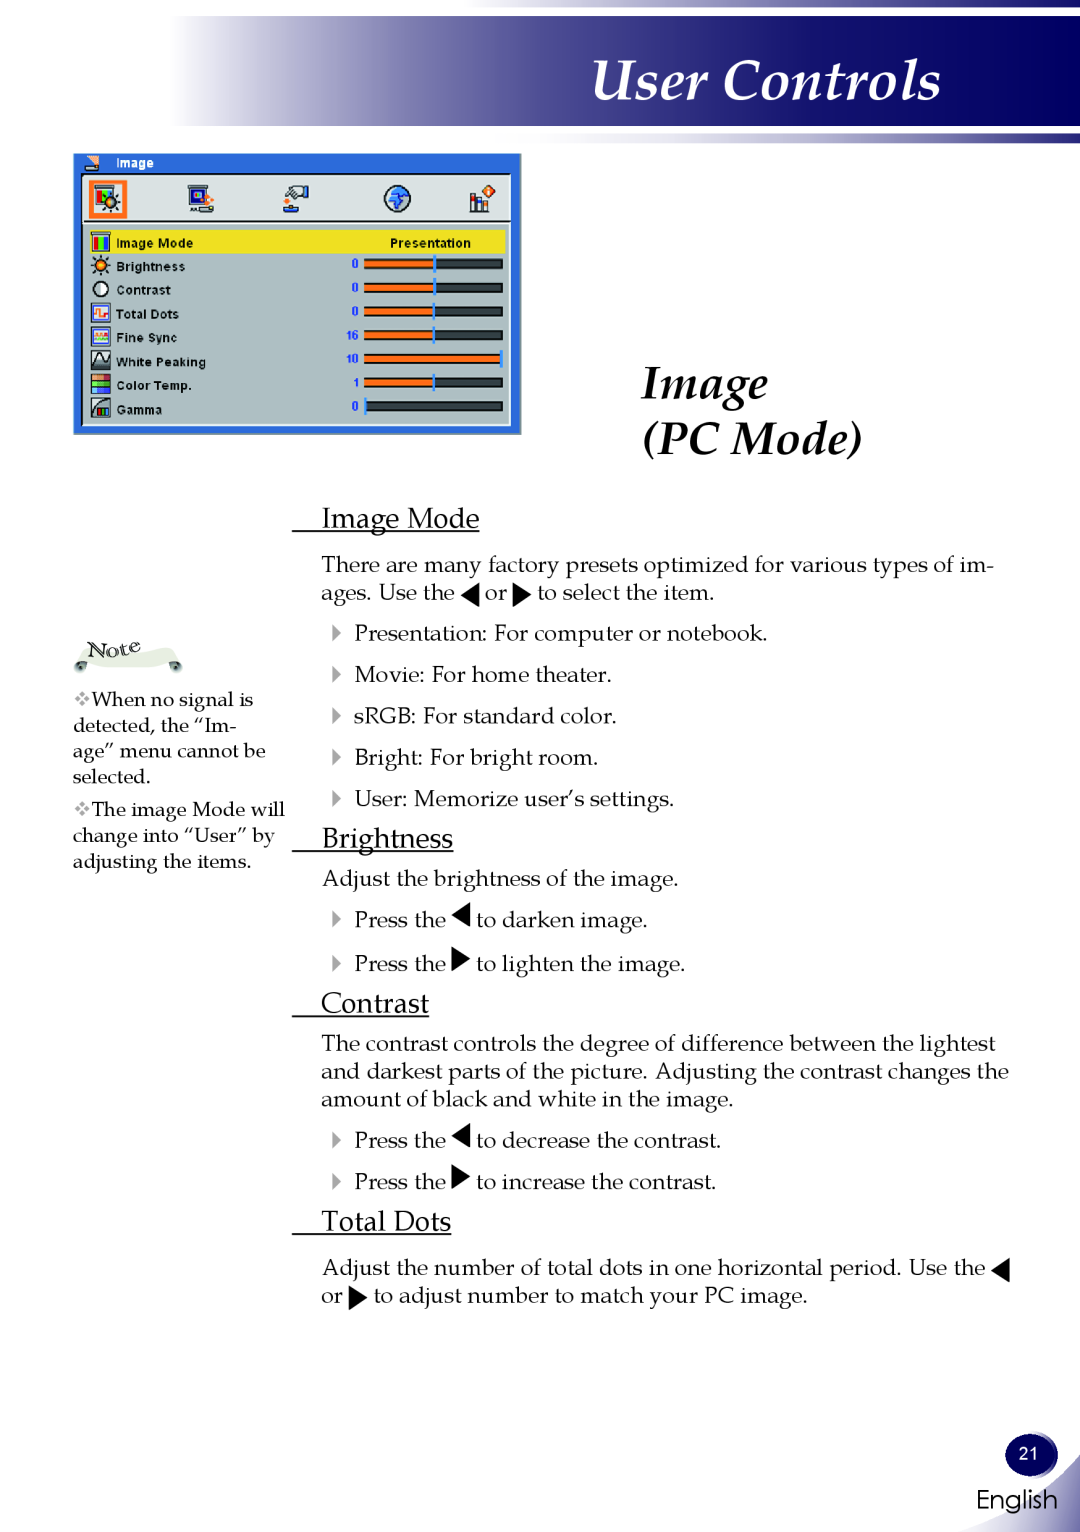 Sanyo PDG-DWL100 owner manual Image PC Mode, Image Mode, Brightness, Contrast, Total Dots, User Controls, English 